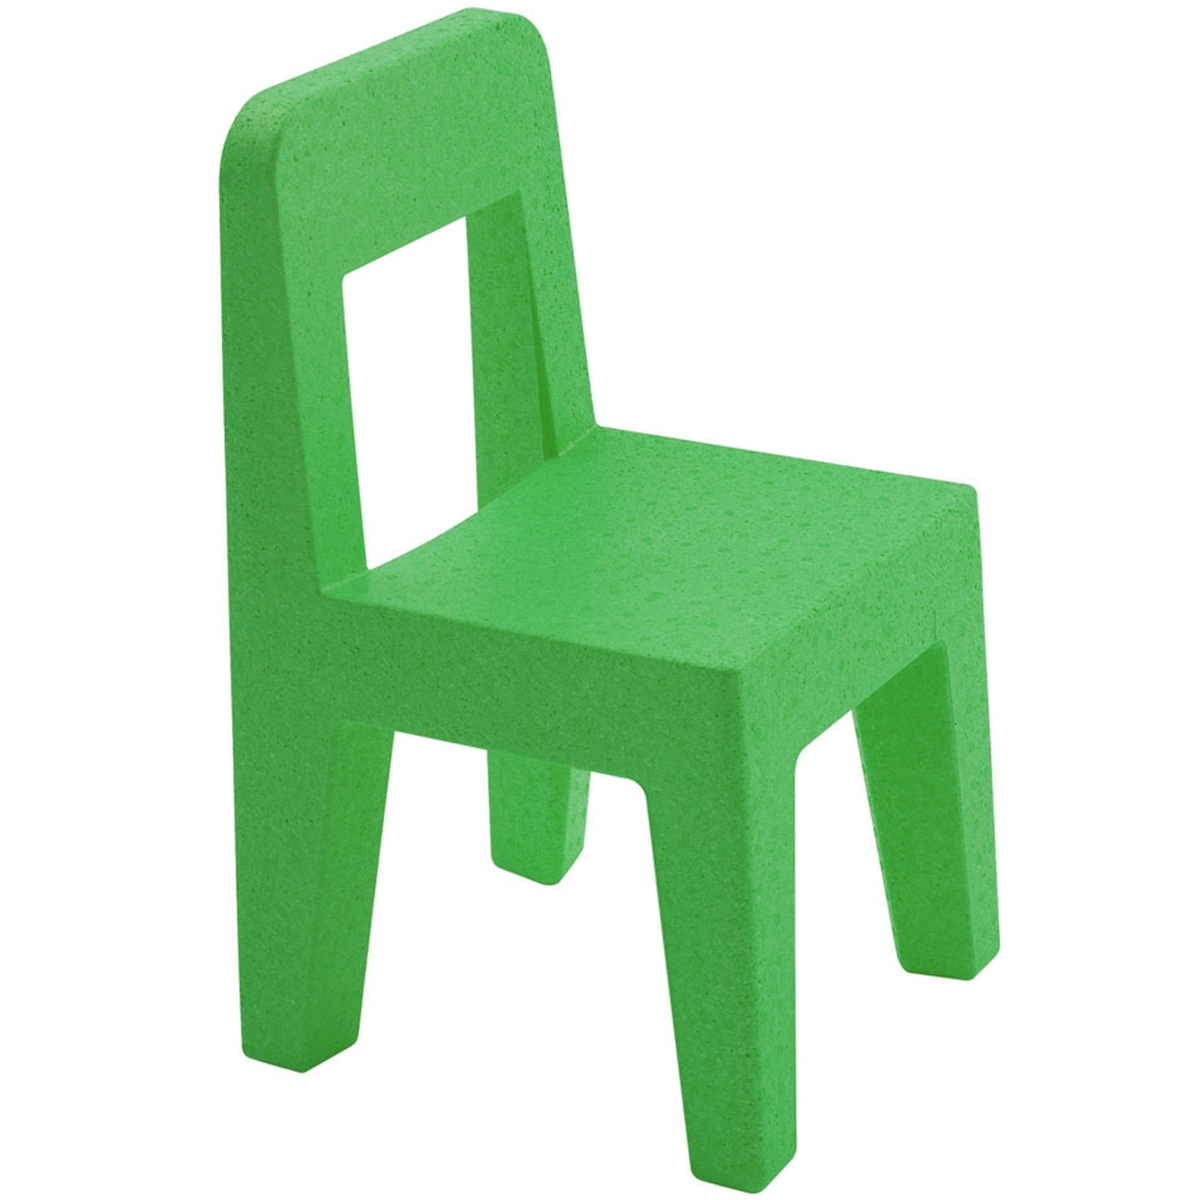 Magis Me Too designové dětské židle Seggiolina Pop